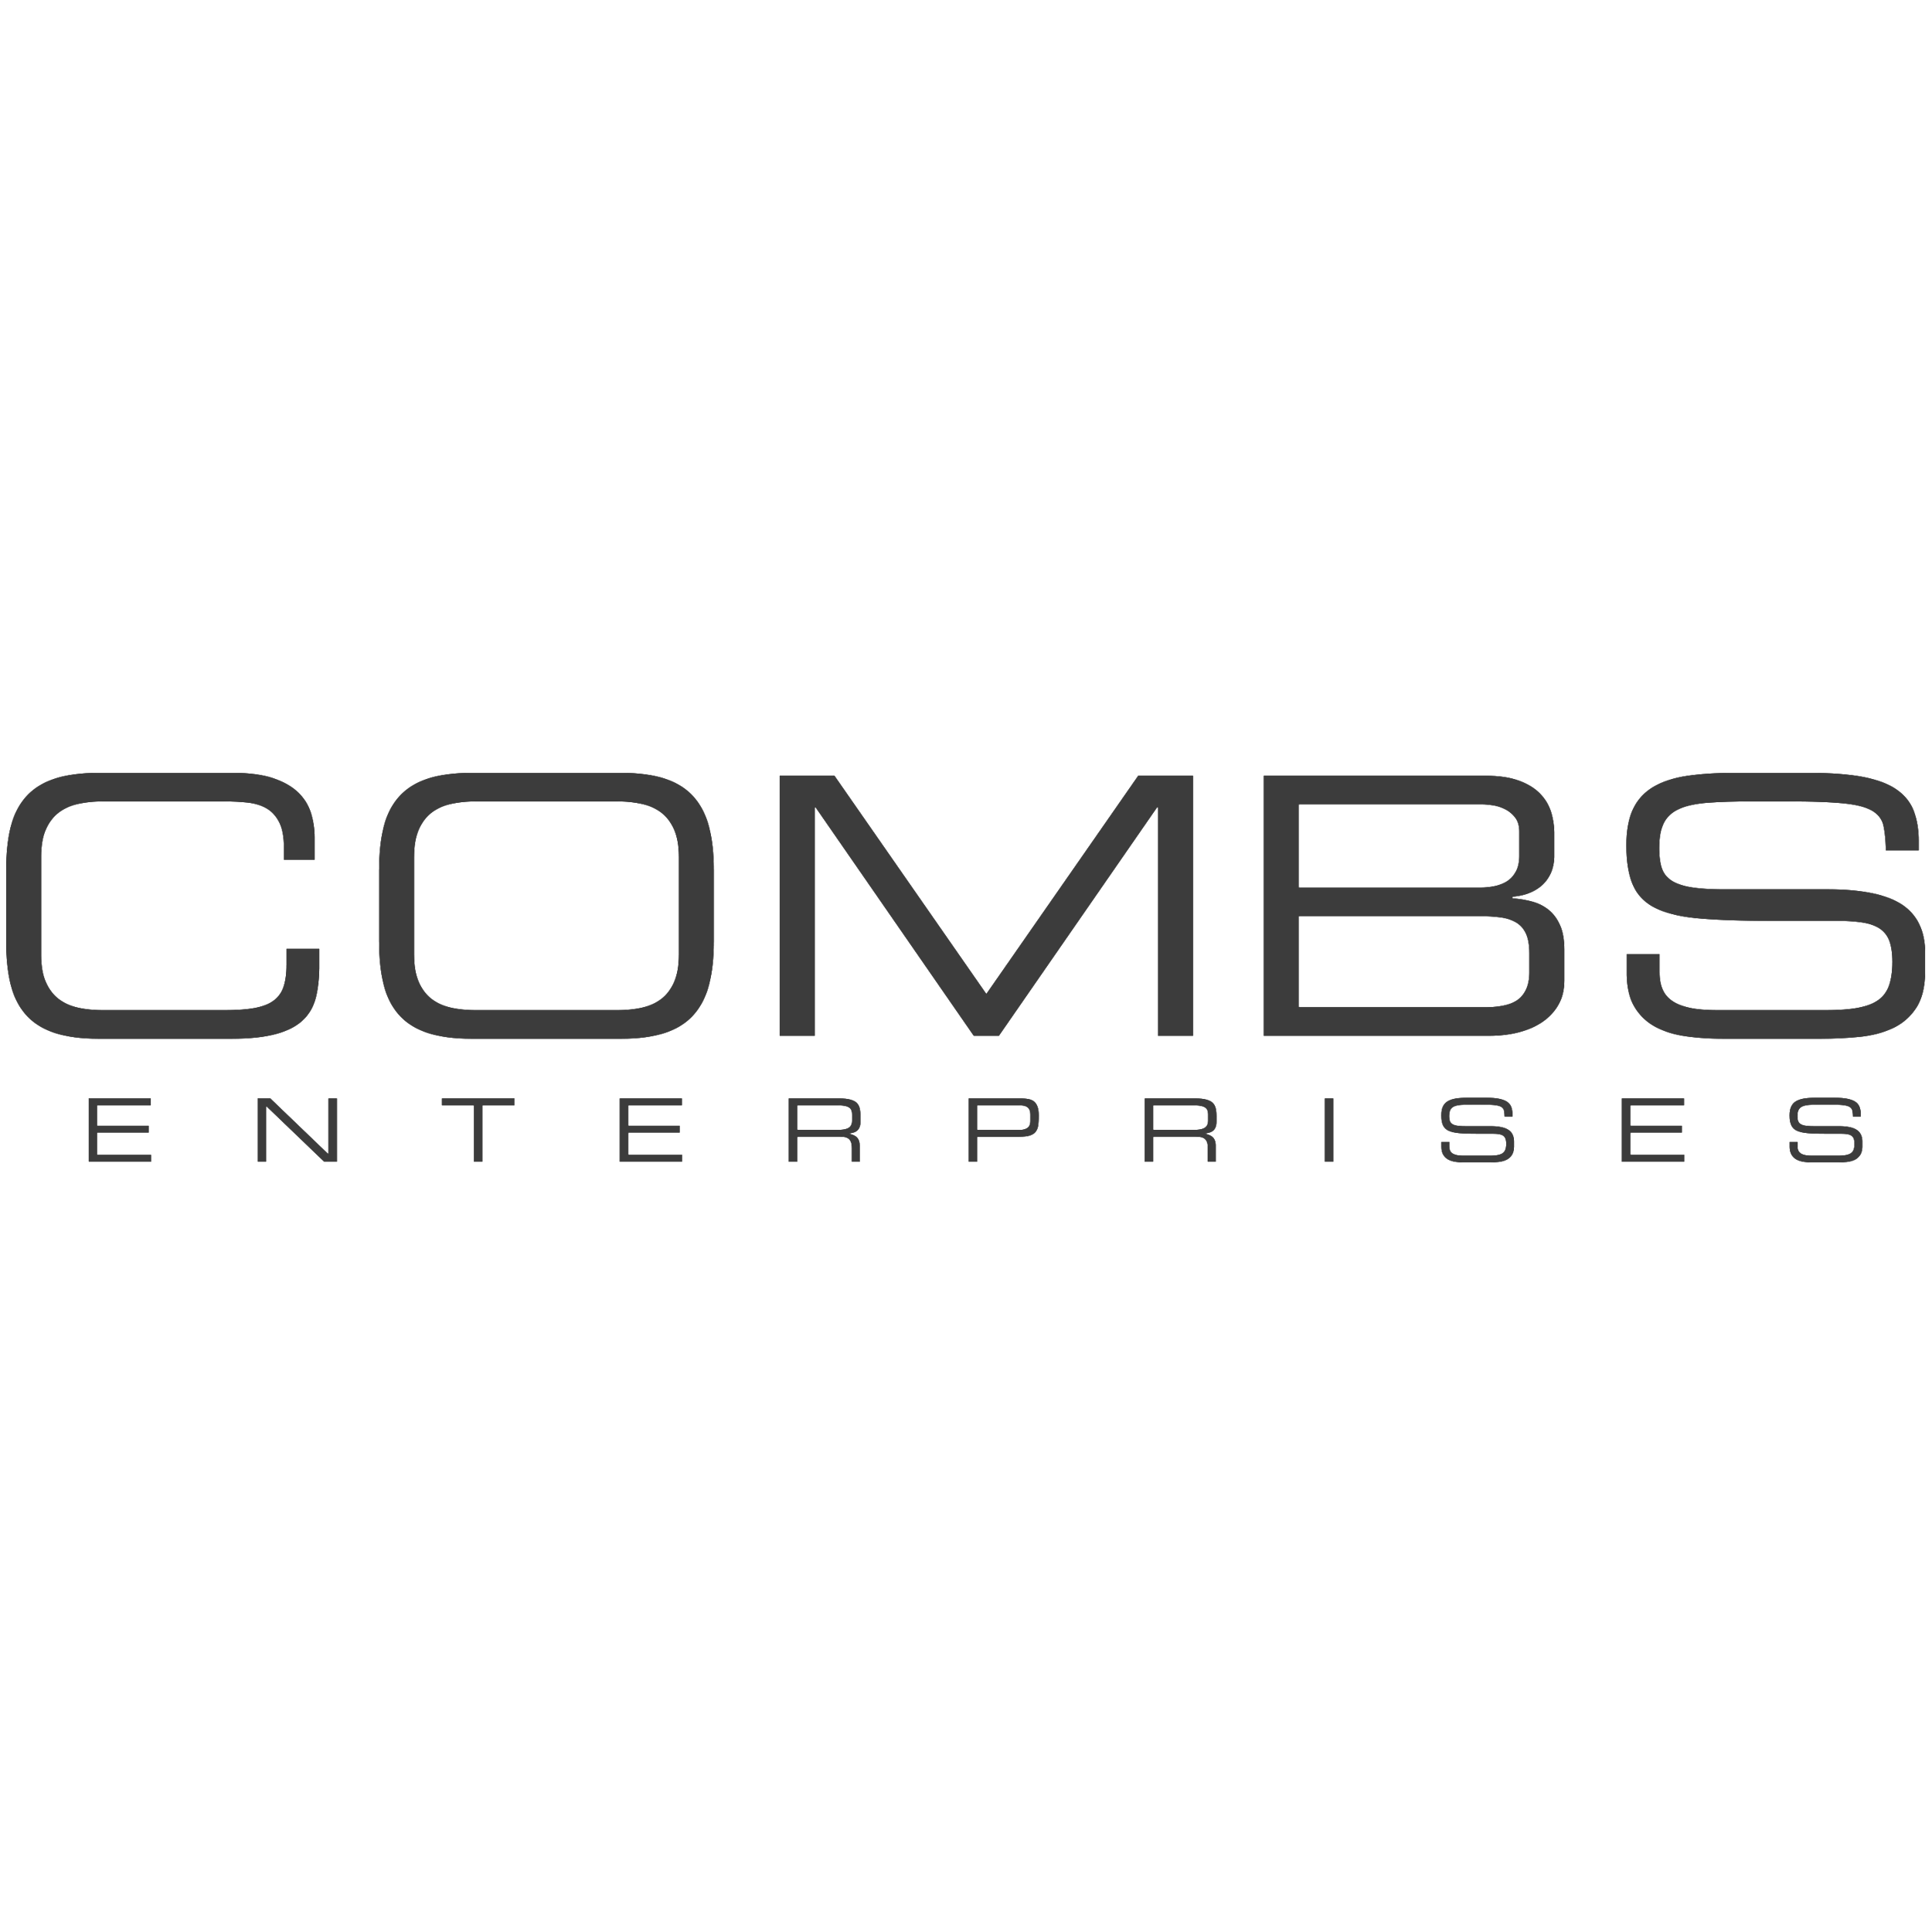 Combs Enterprise.png